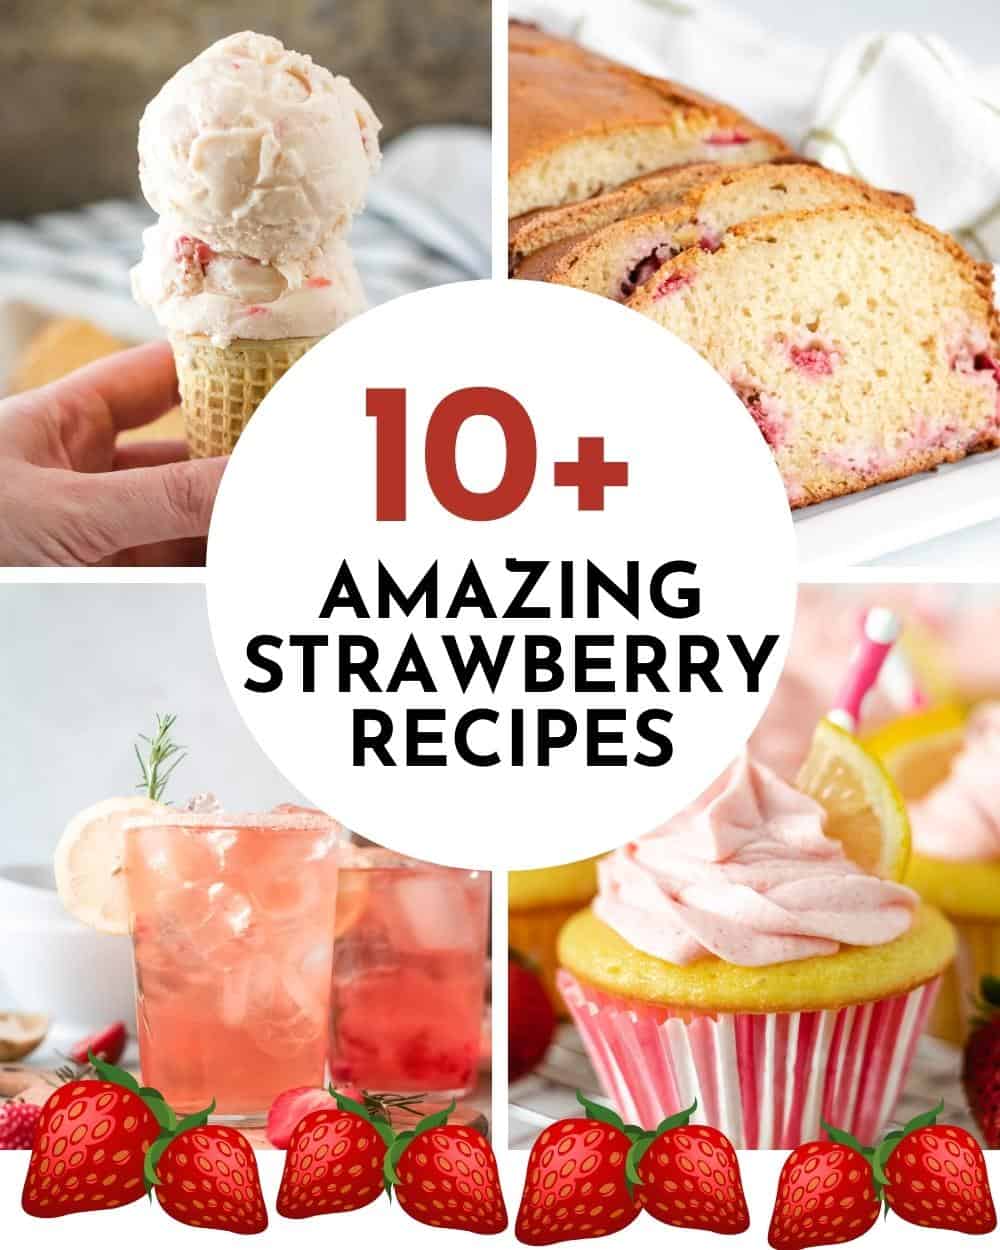 Summer strawberry recipes